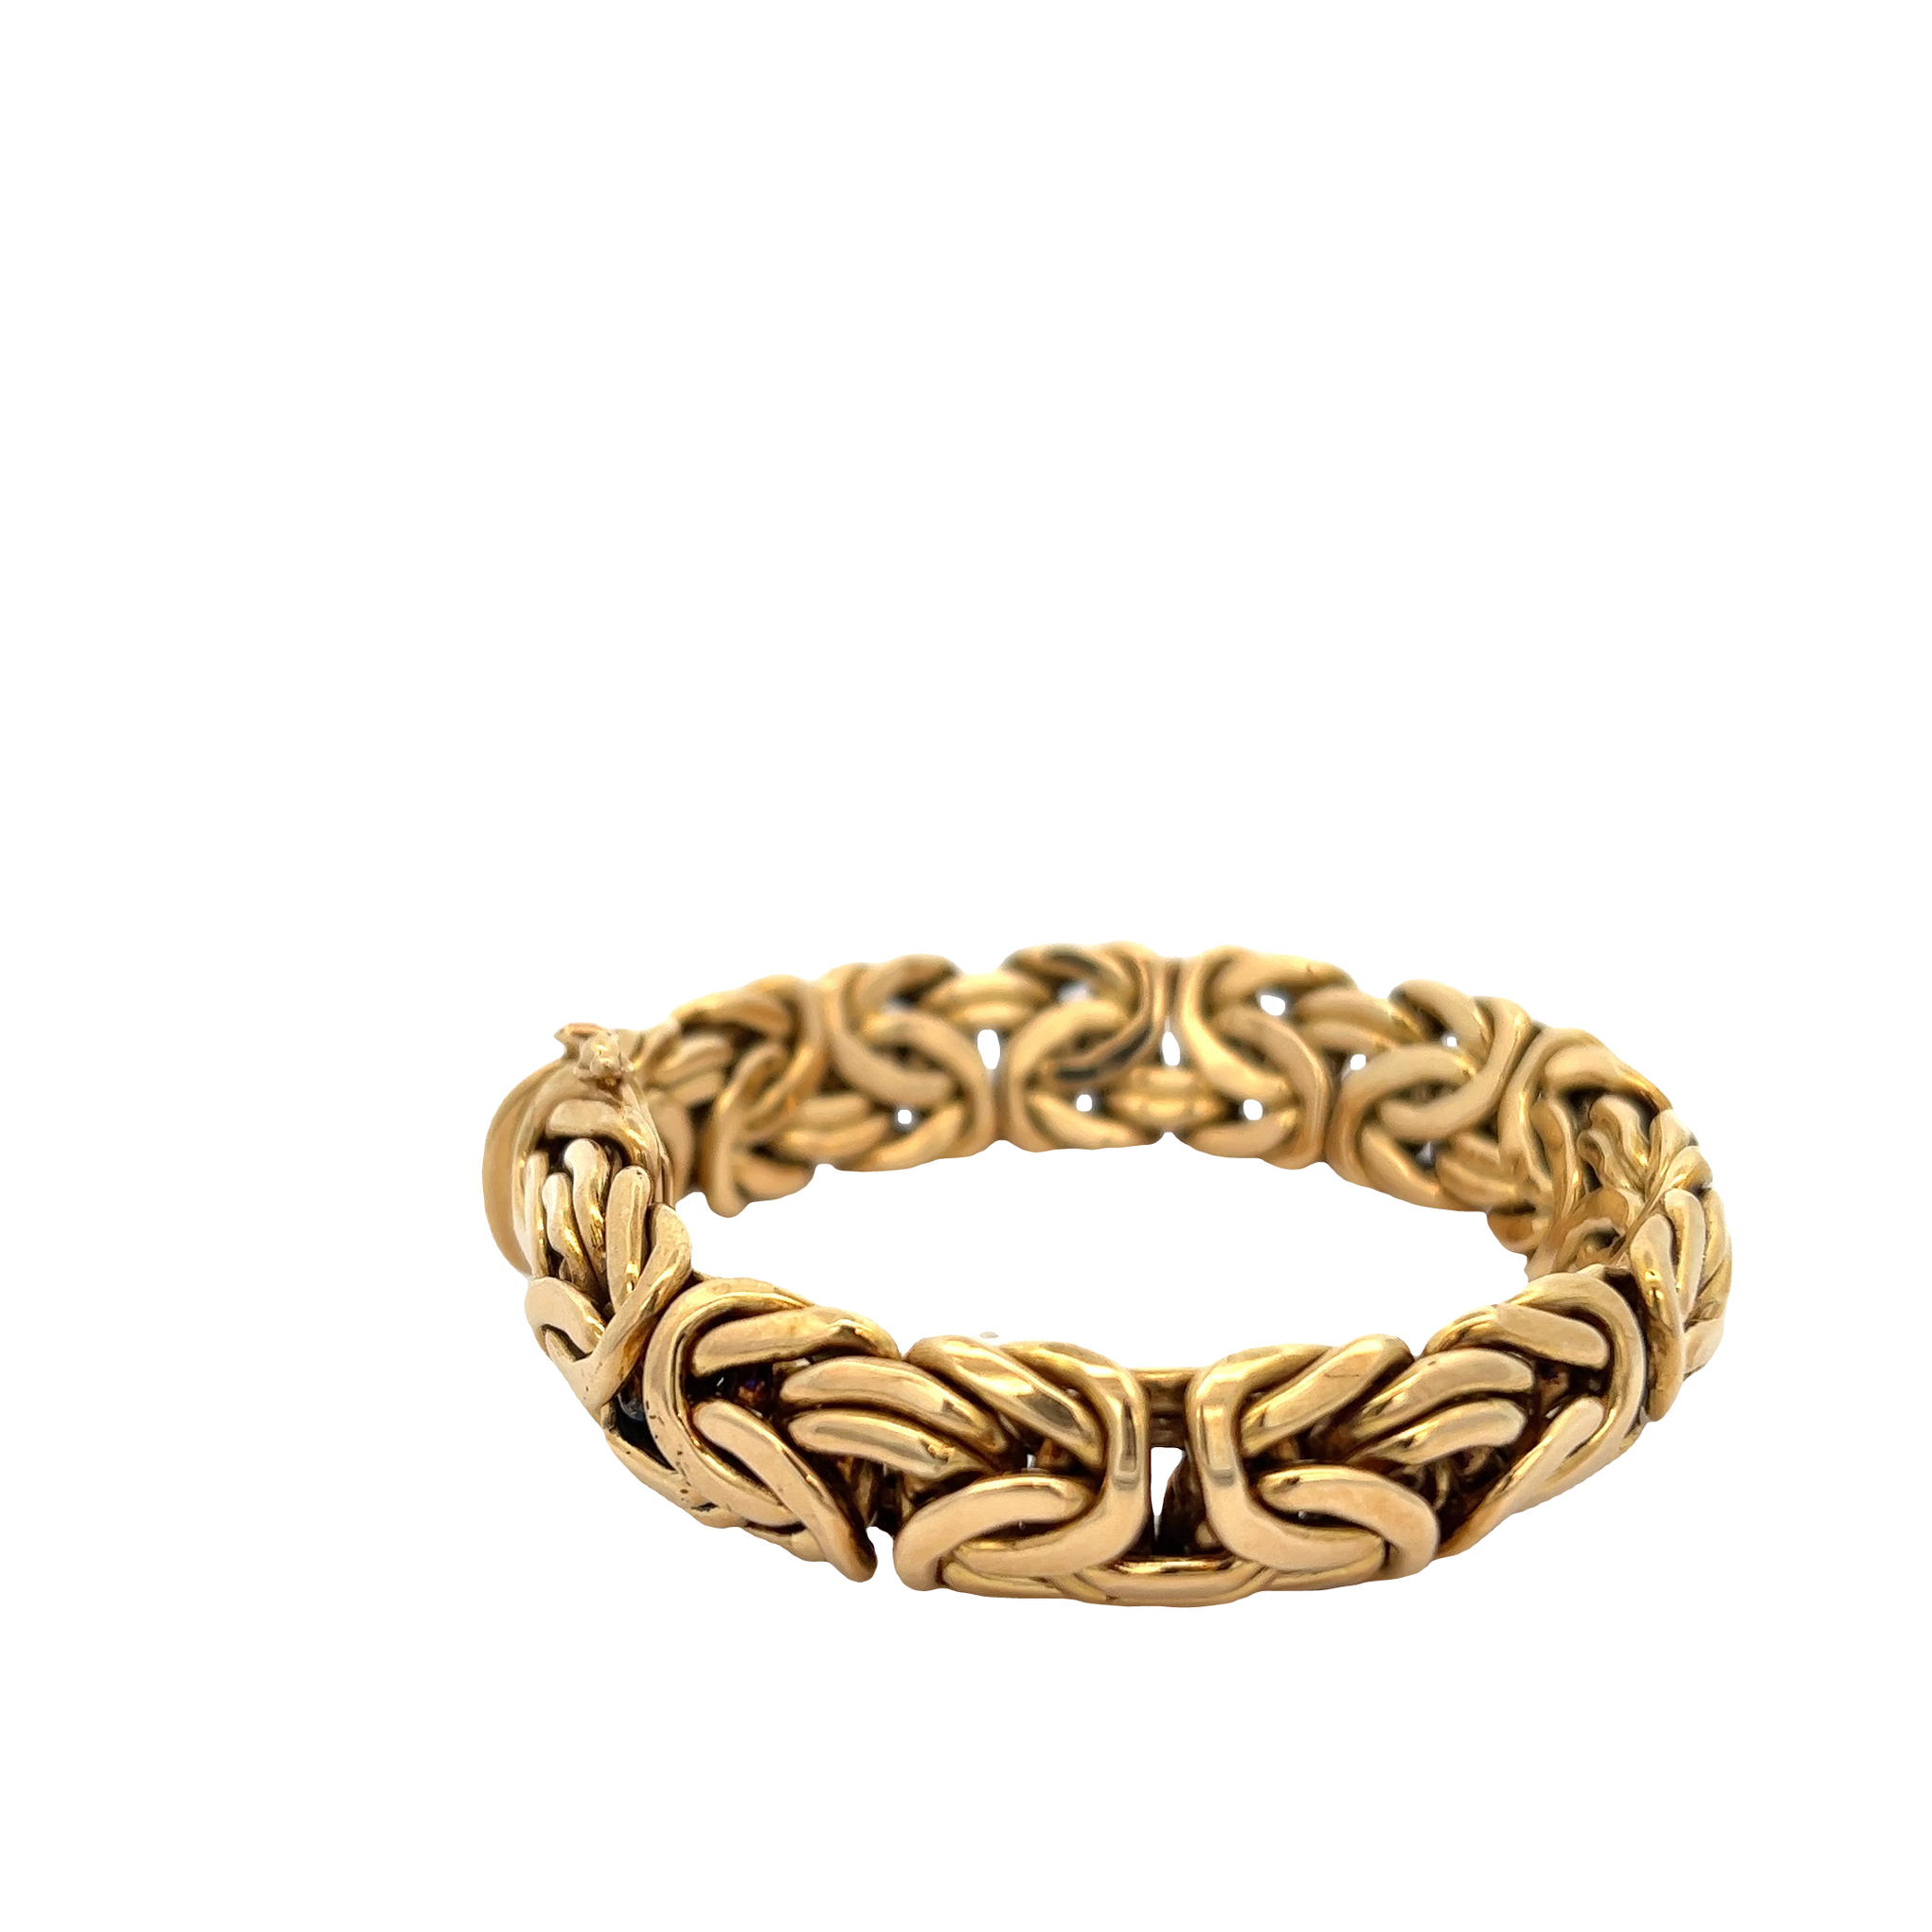 Vintage 1970s Italian Made 14KT Yellow Gold Byzantine Link Bracelet